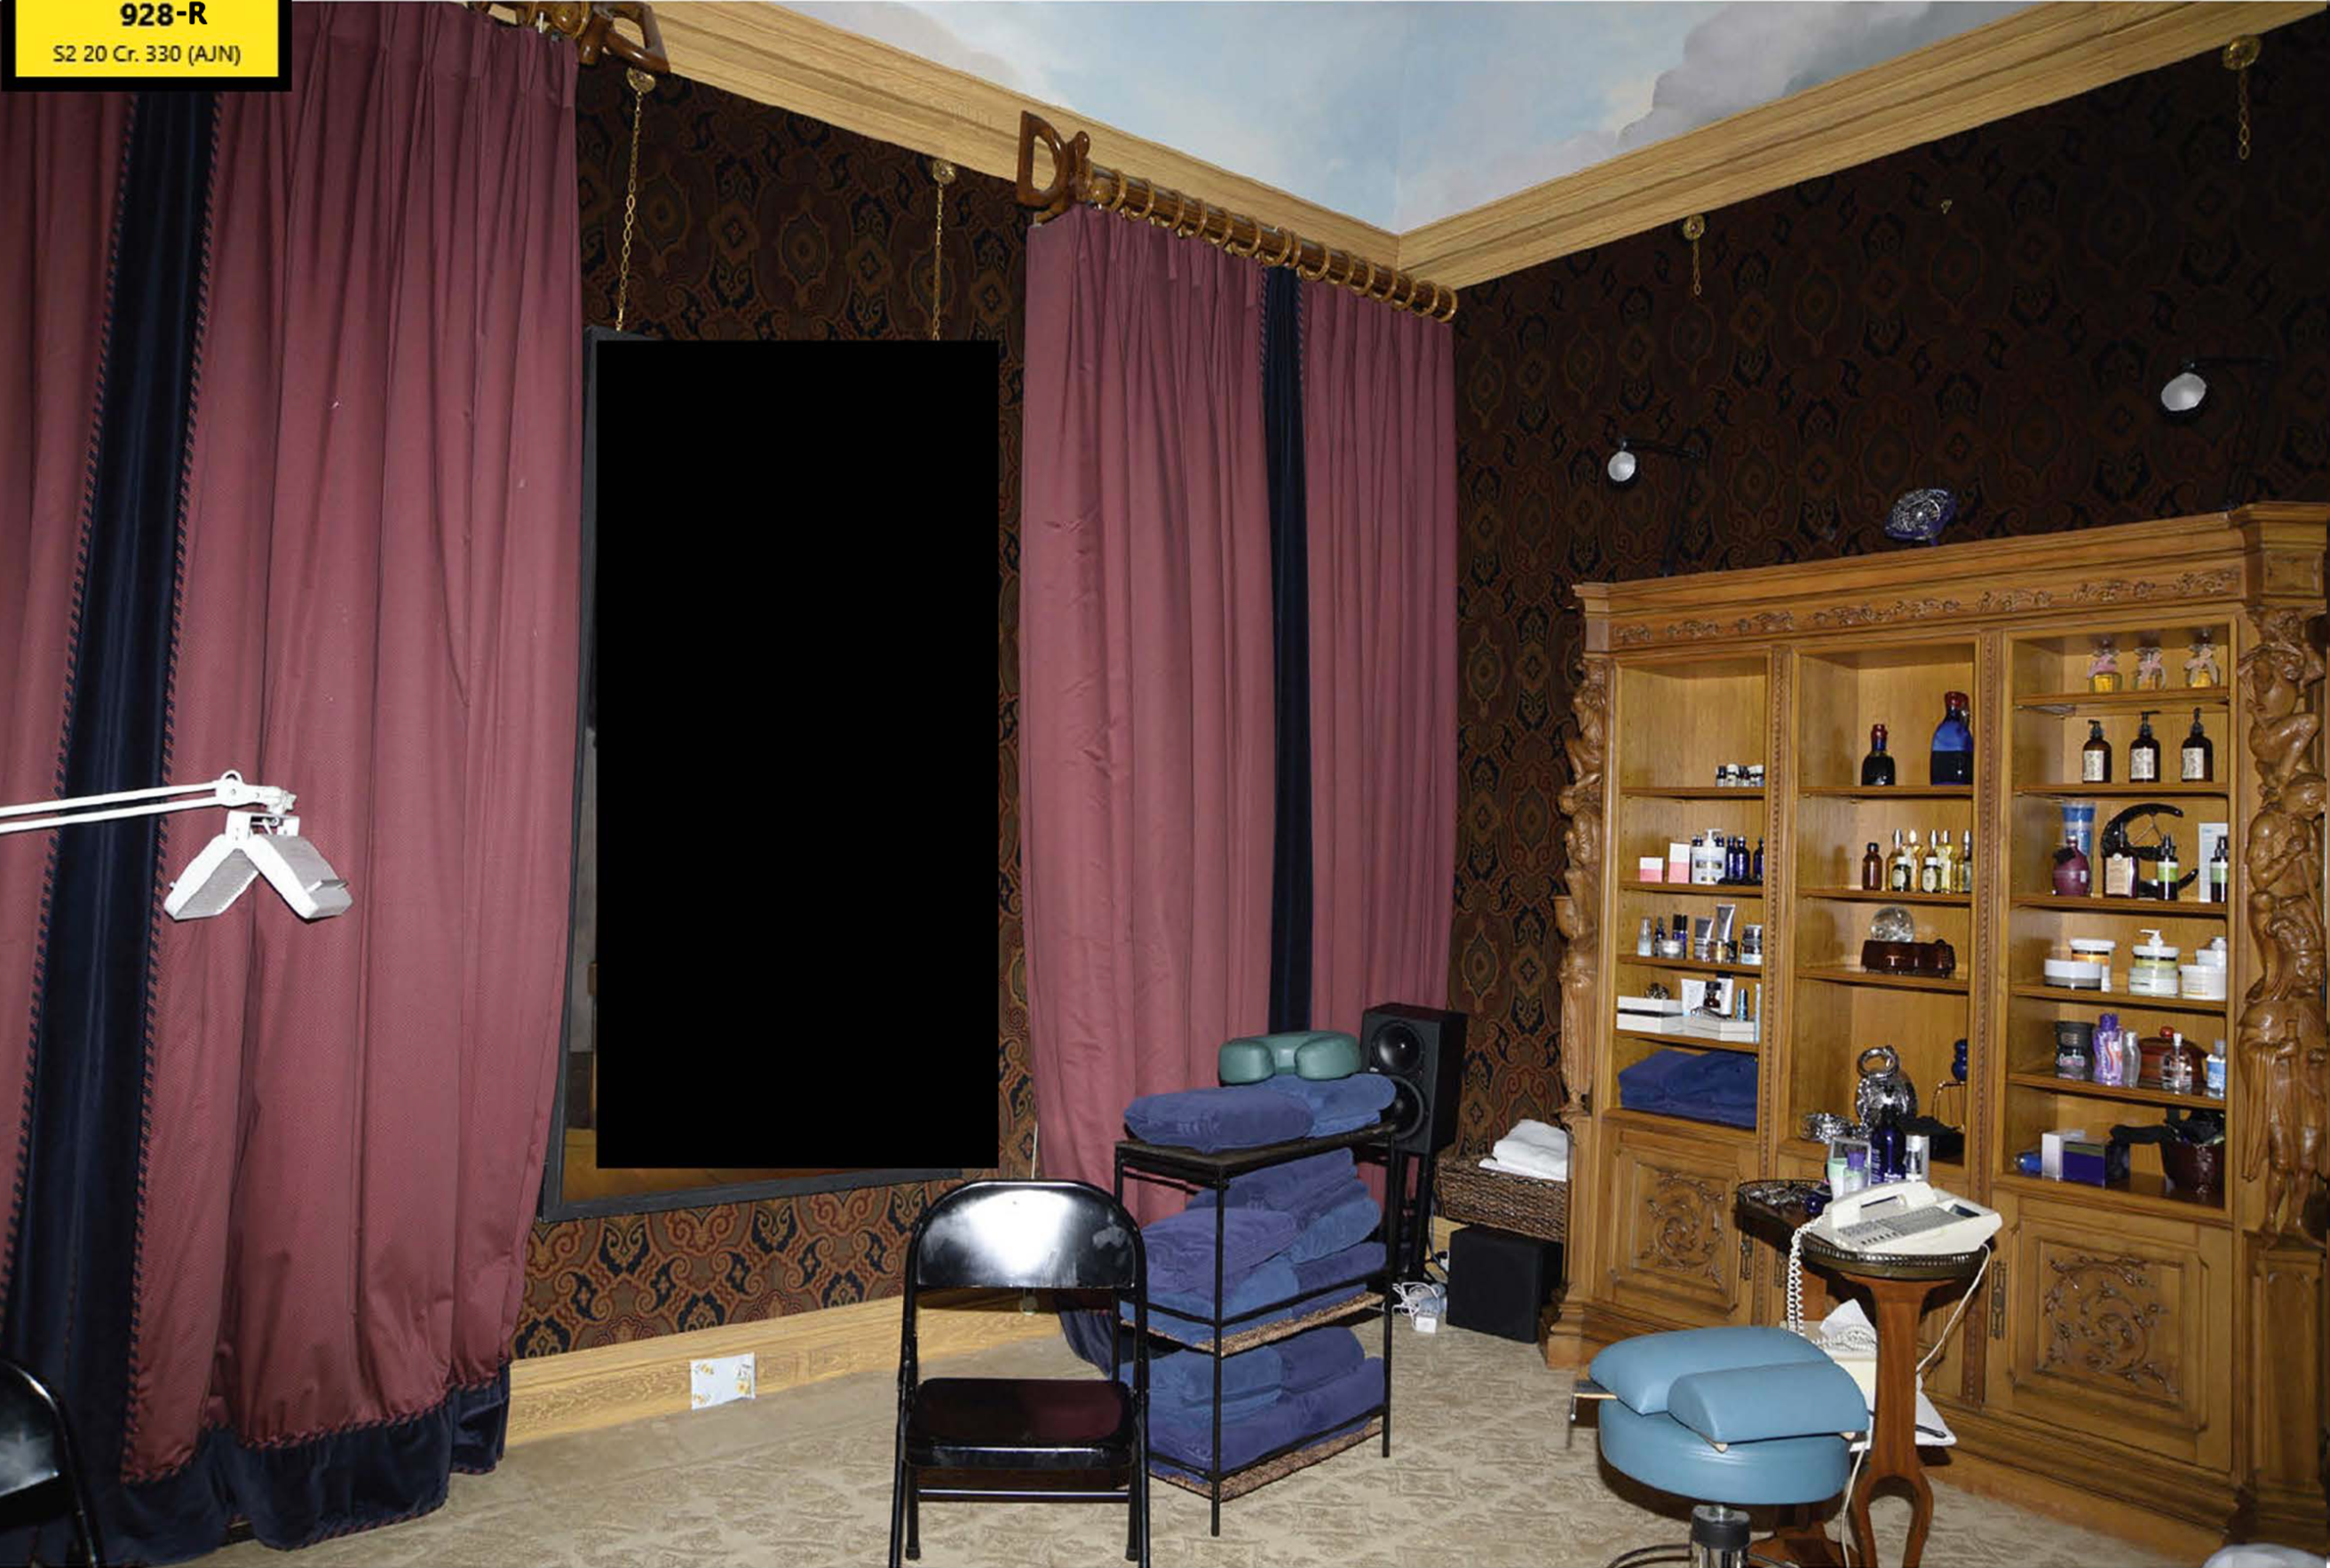 Epstein’s massage room in the 19,000 sq ft Manhattan townhouse